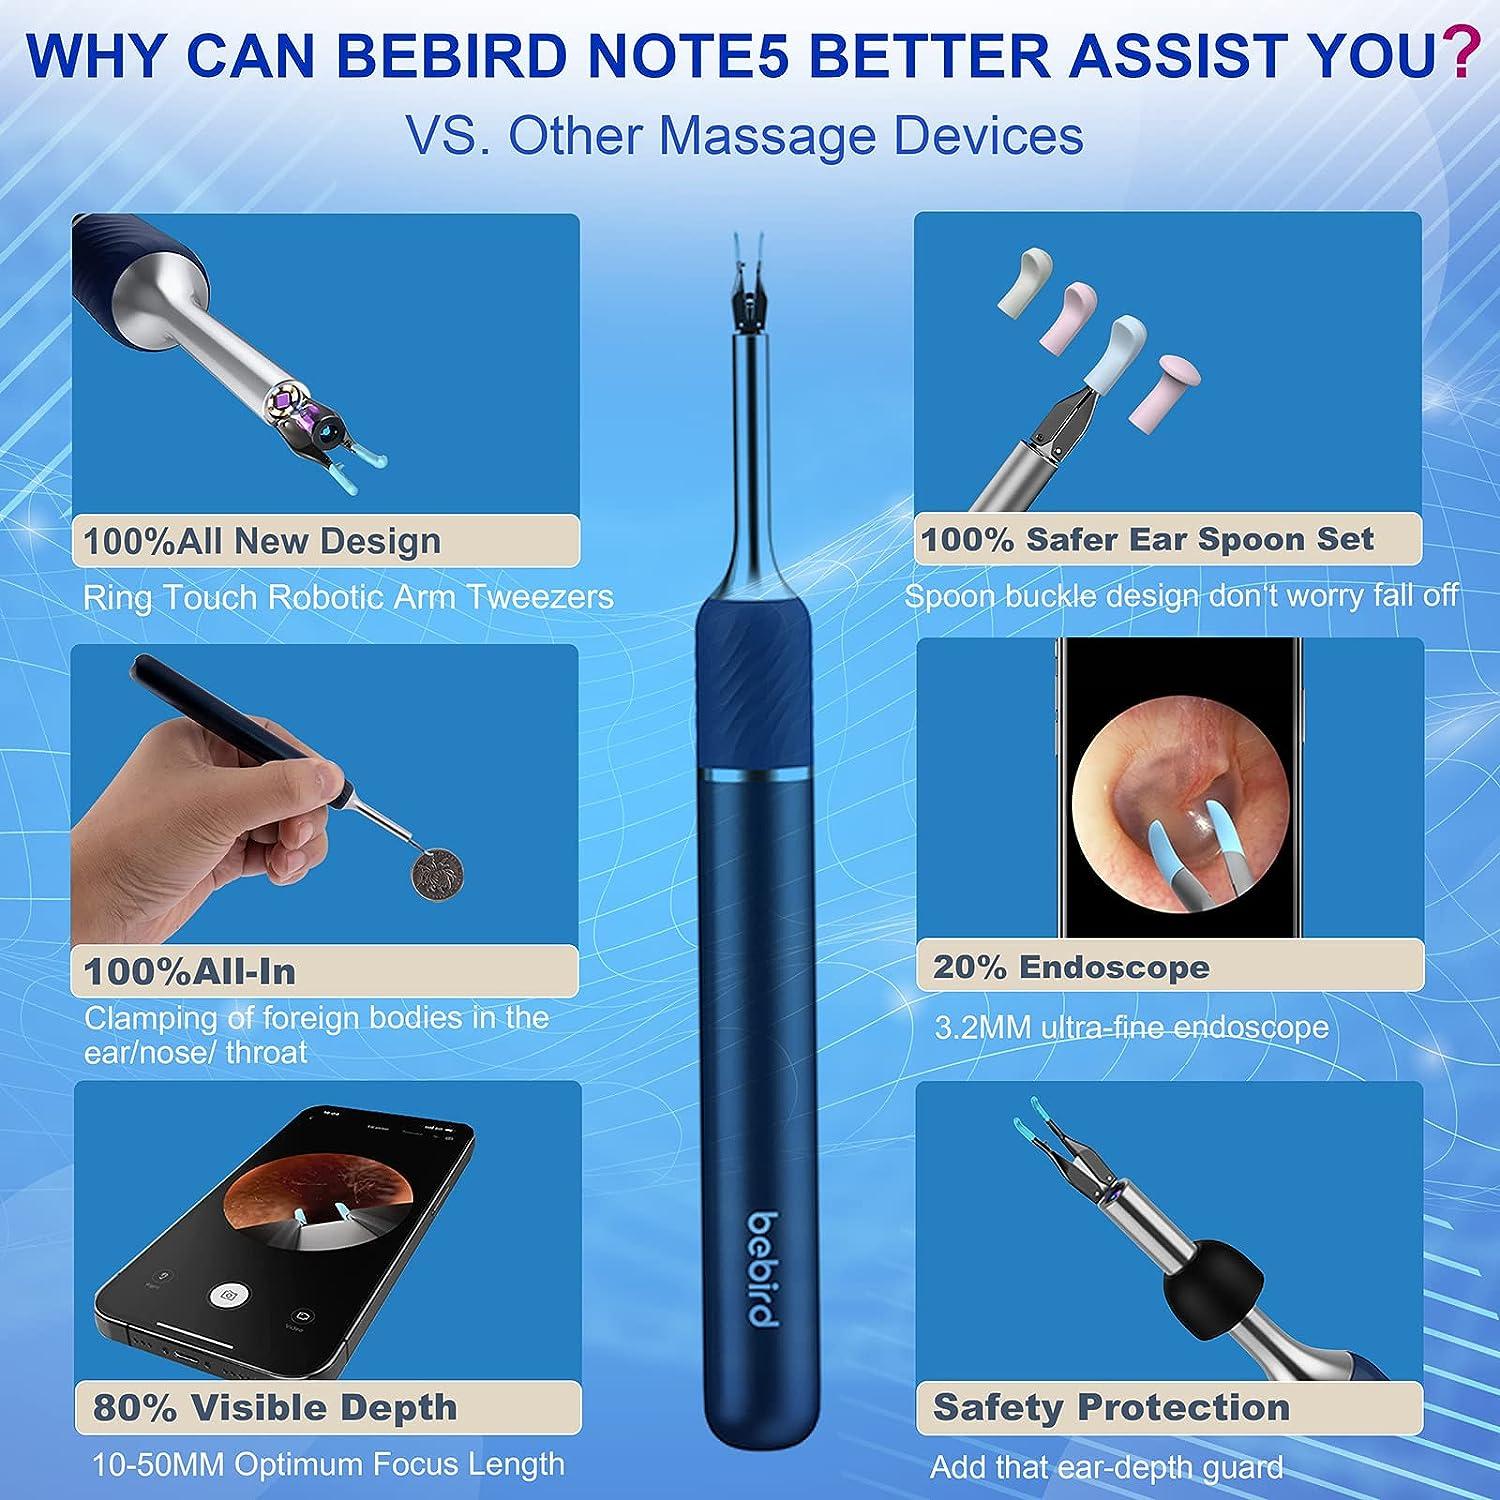 Bebird Pro Note5 Ear Wax Removal Tool Camera Bebird Ear Cleaner 10